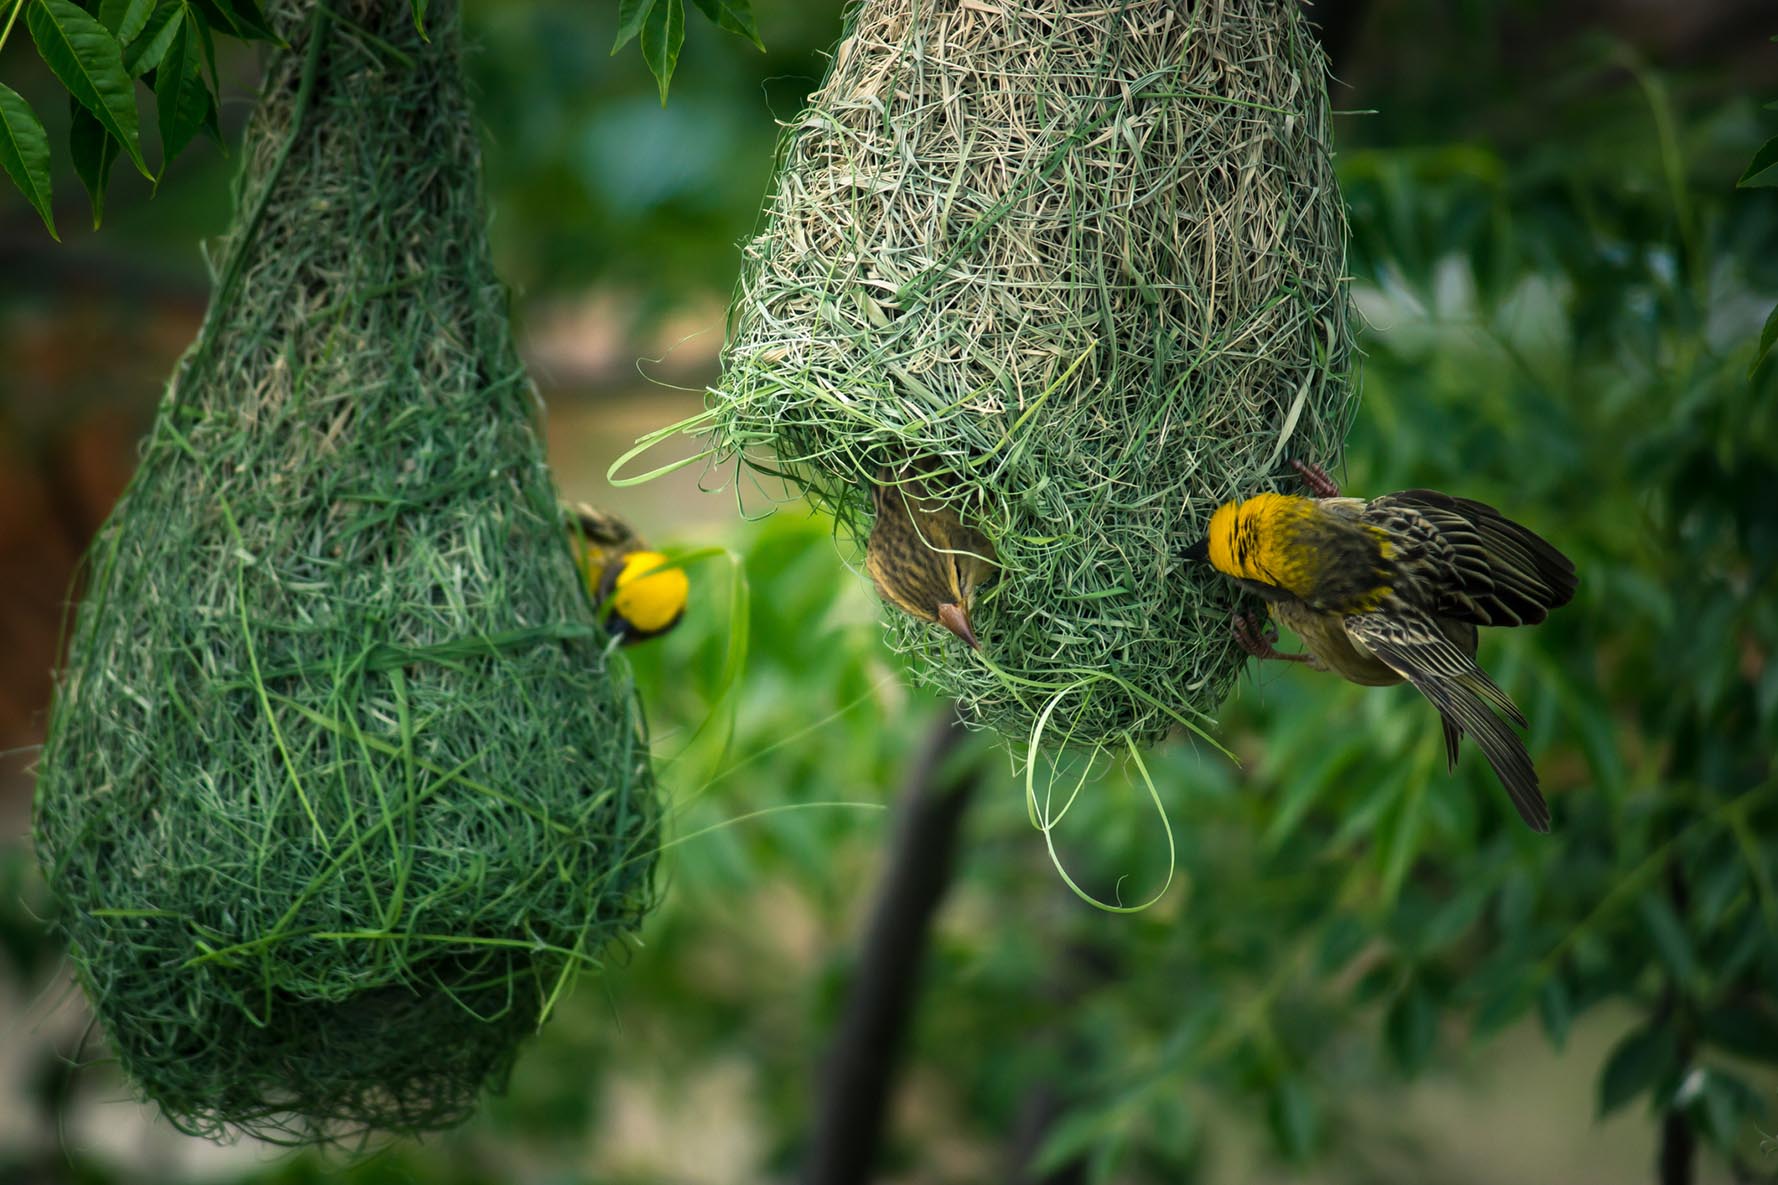 Male Baya weaver birds building a nest 